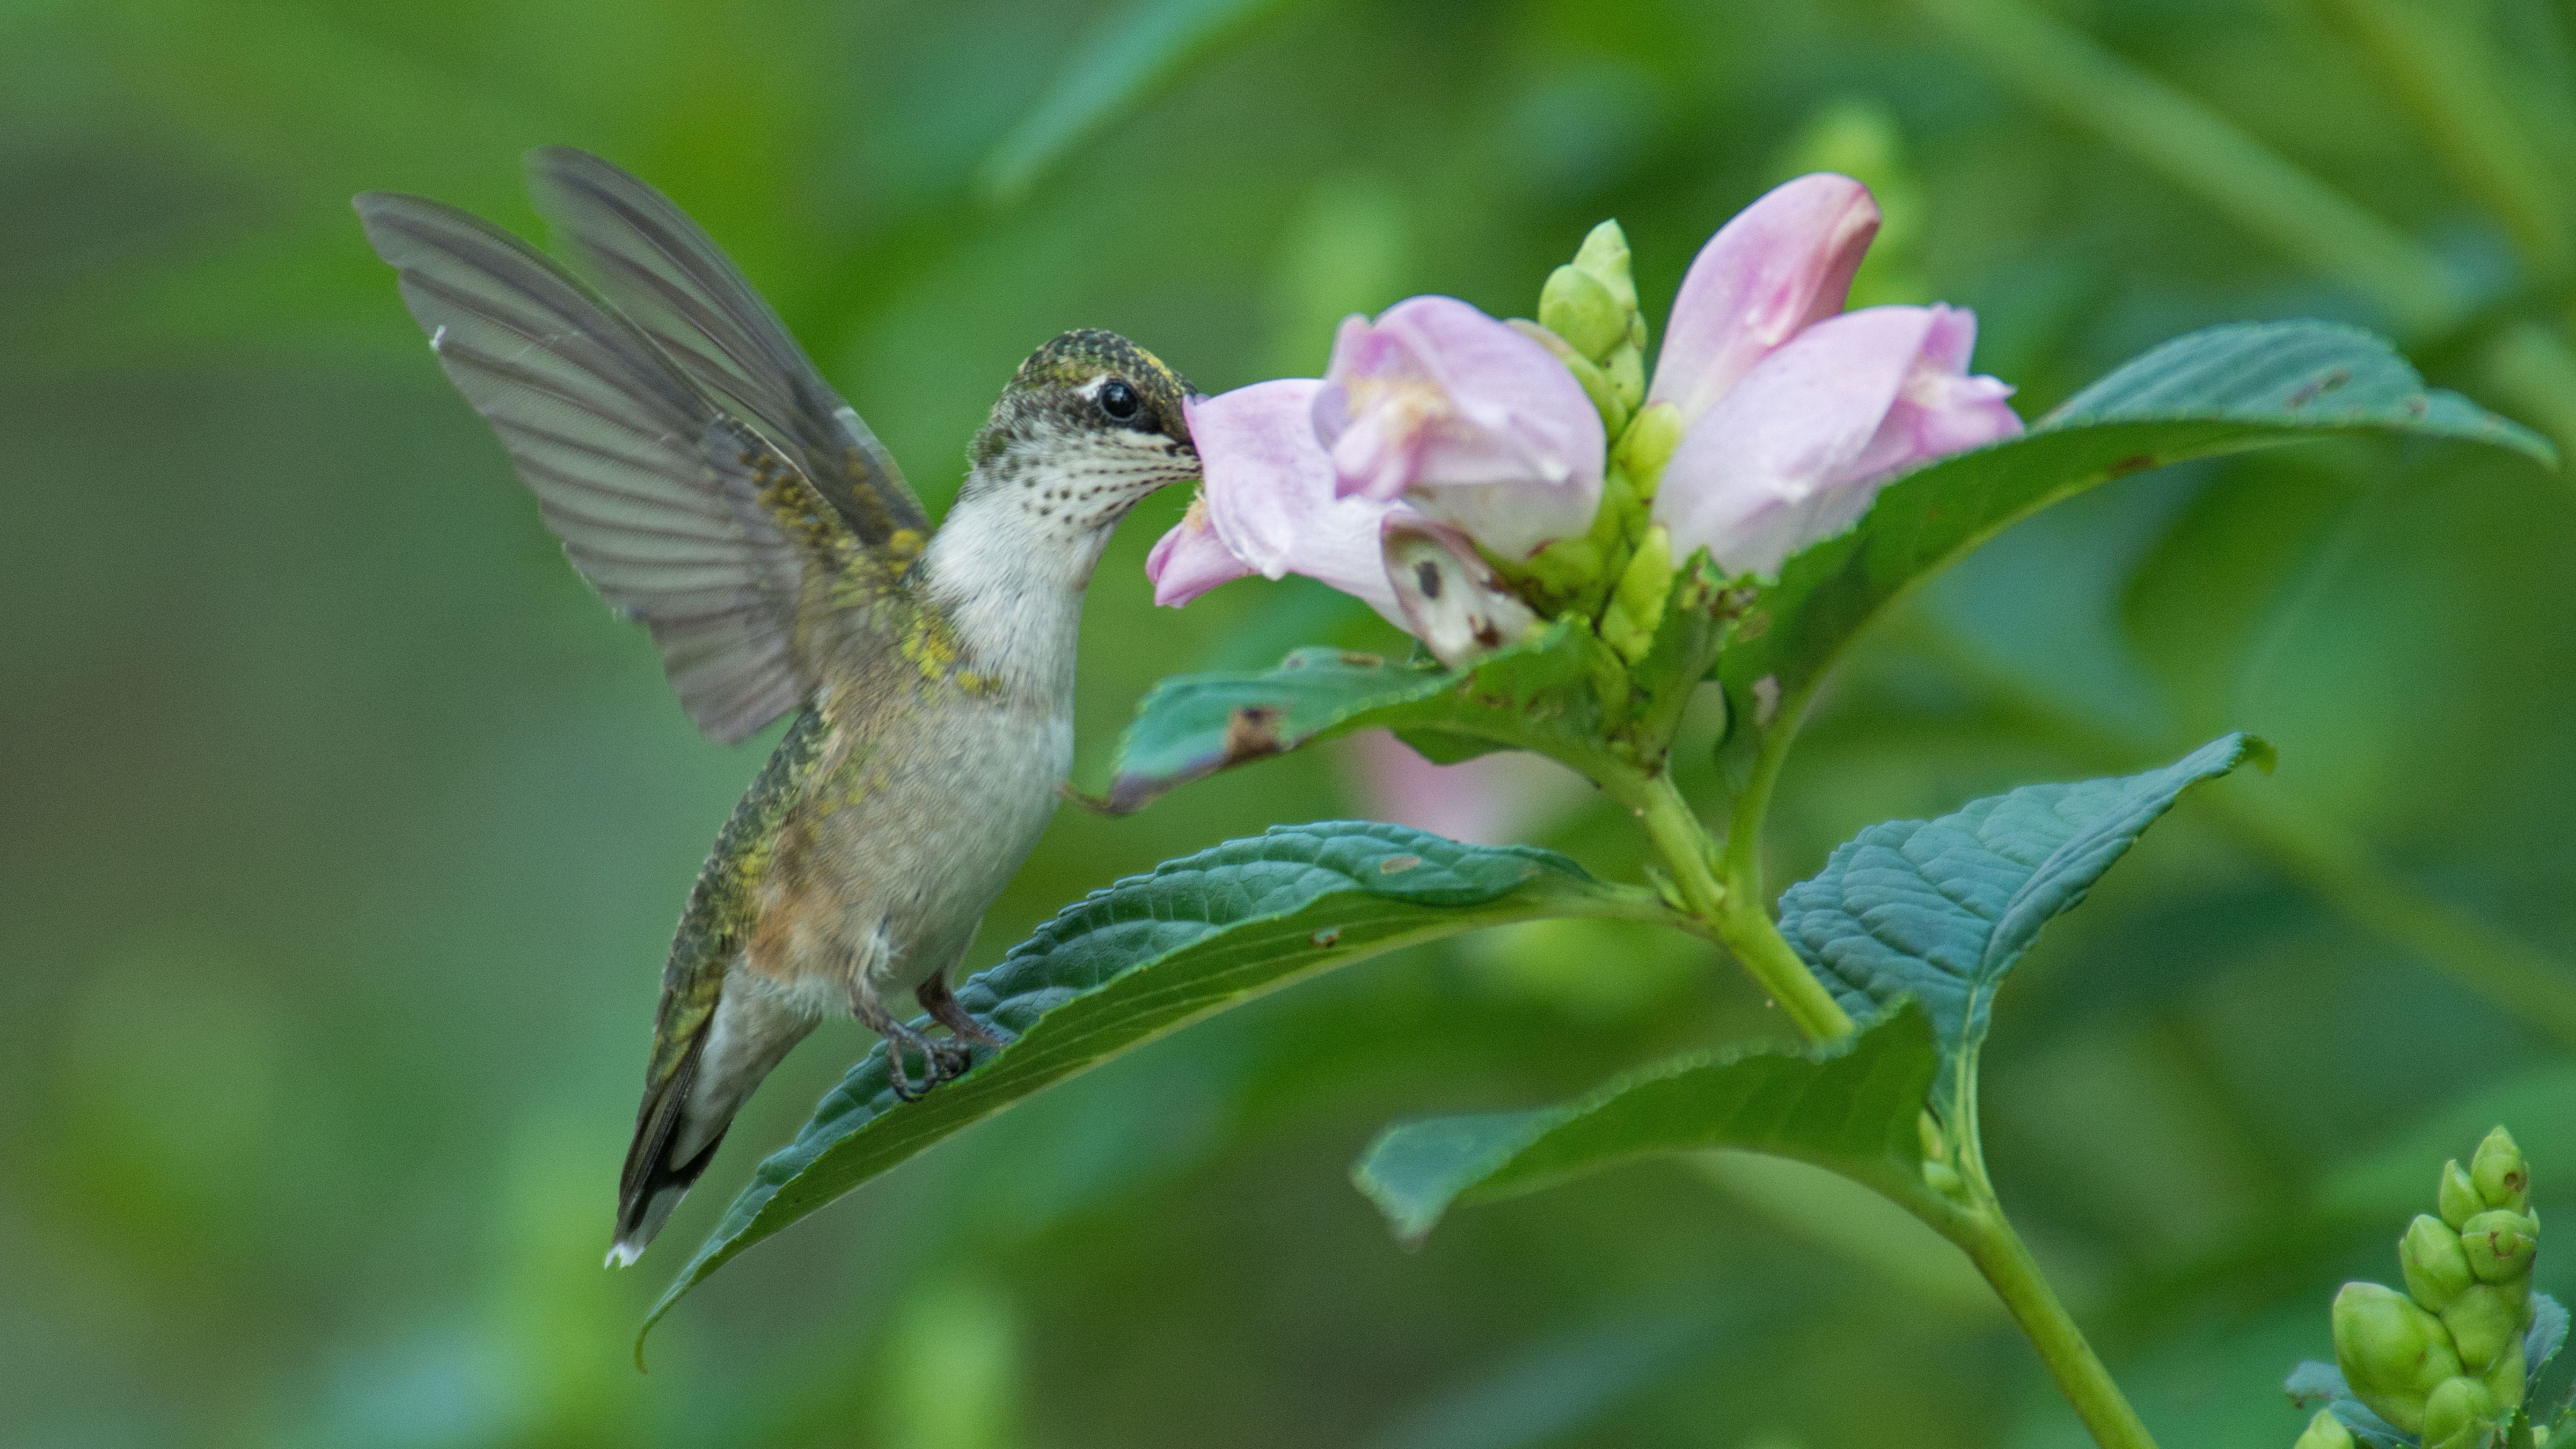 Hummingbird nectaring on a turtlehead flower